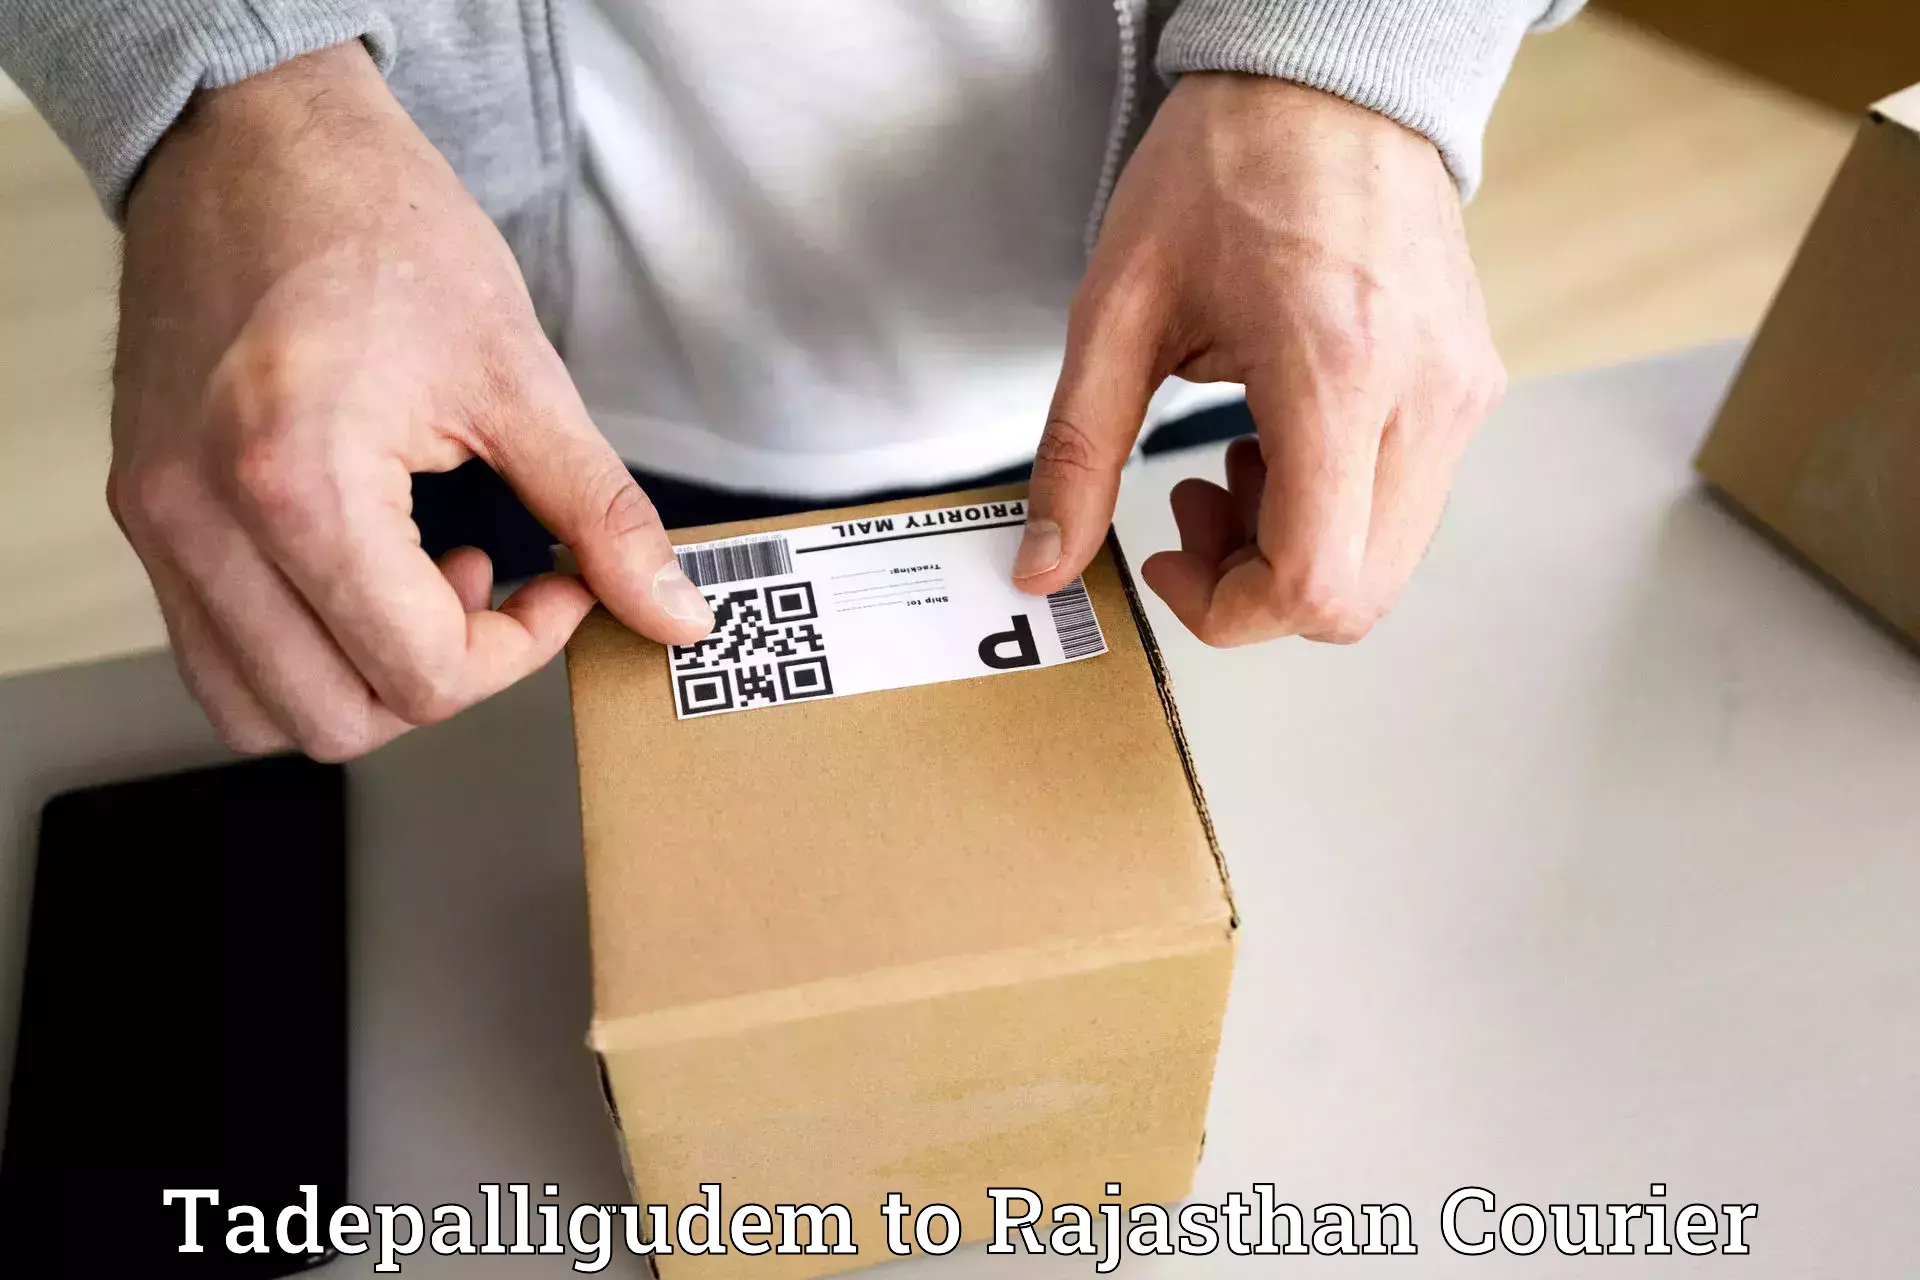 Package delivery network Tadepalligudem to Viratnagar